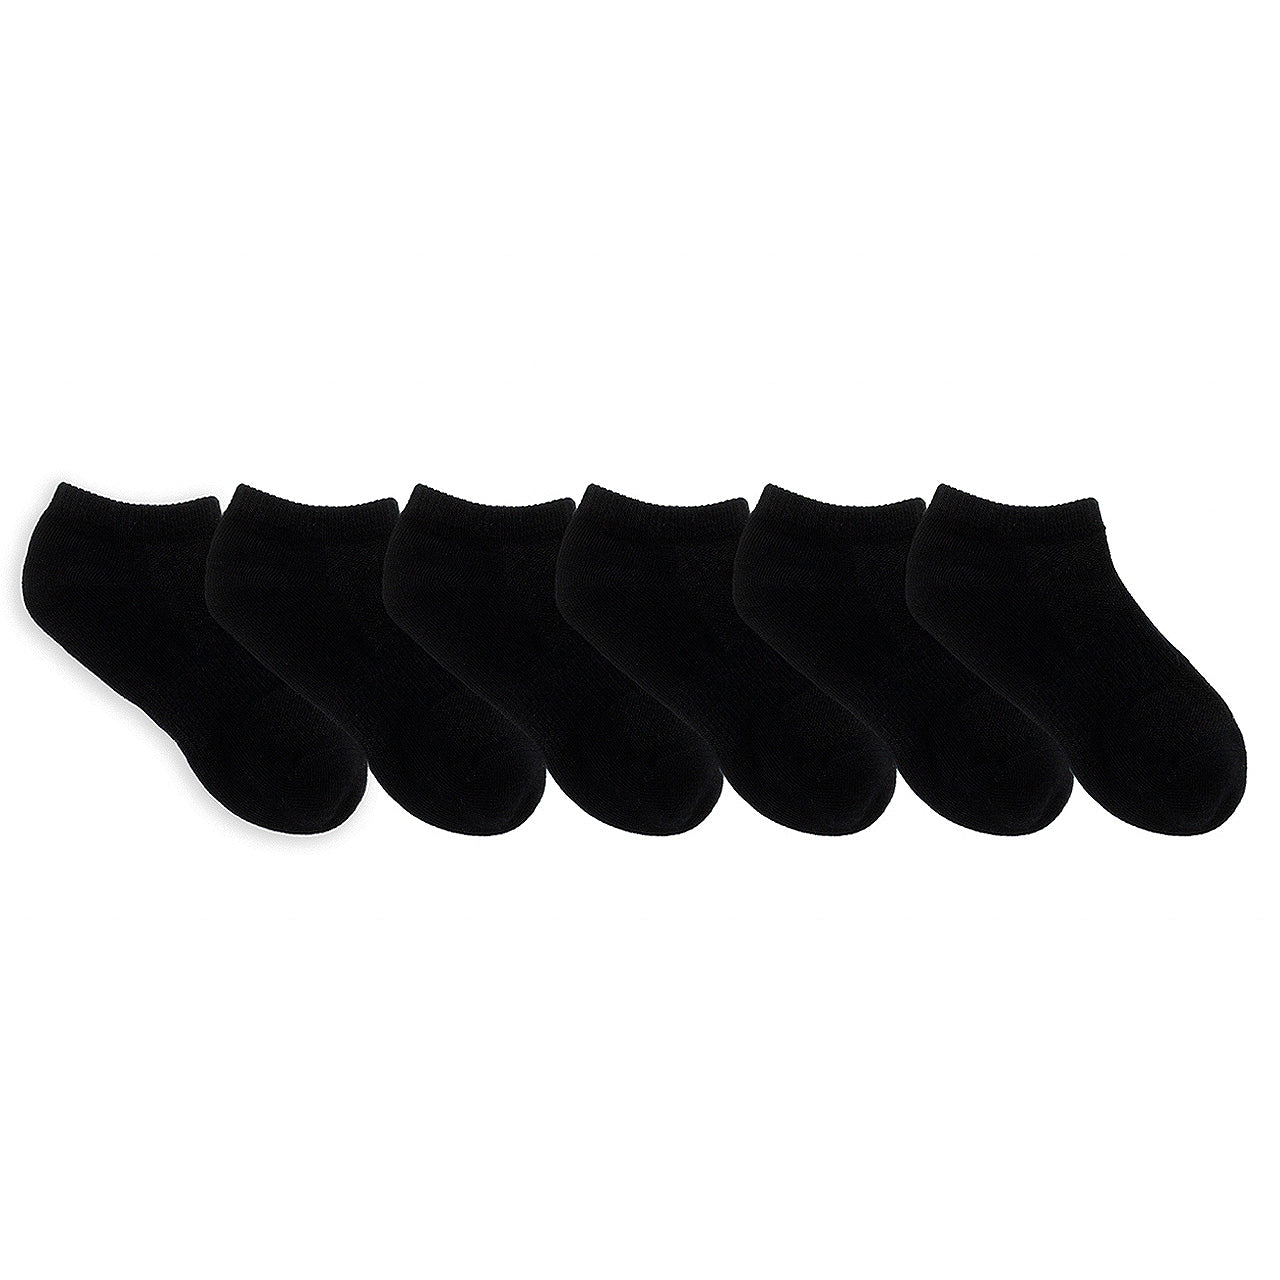 6pk No Show Athletic Socks - Solid Black